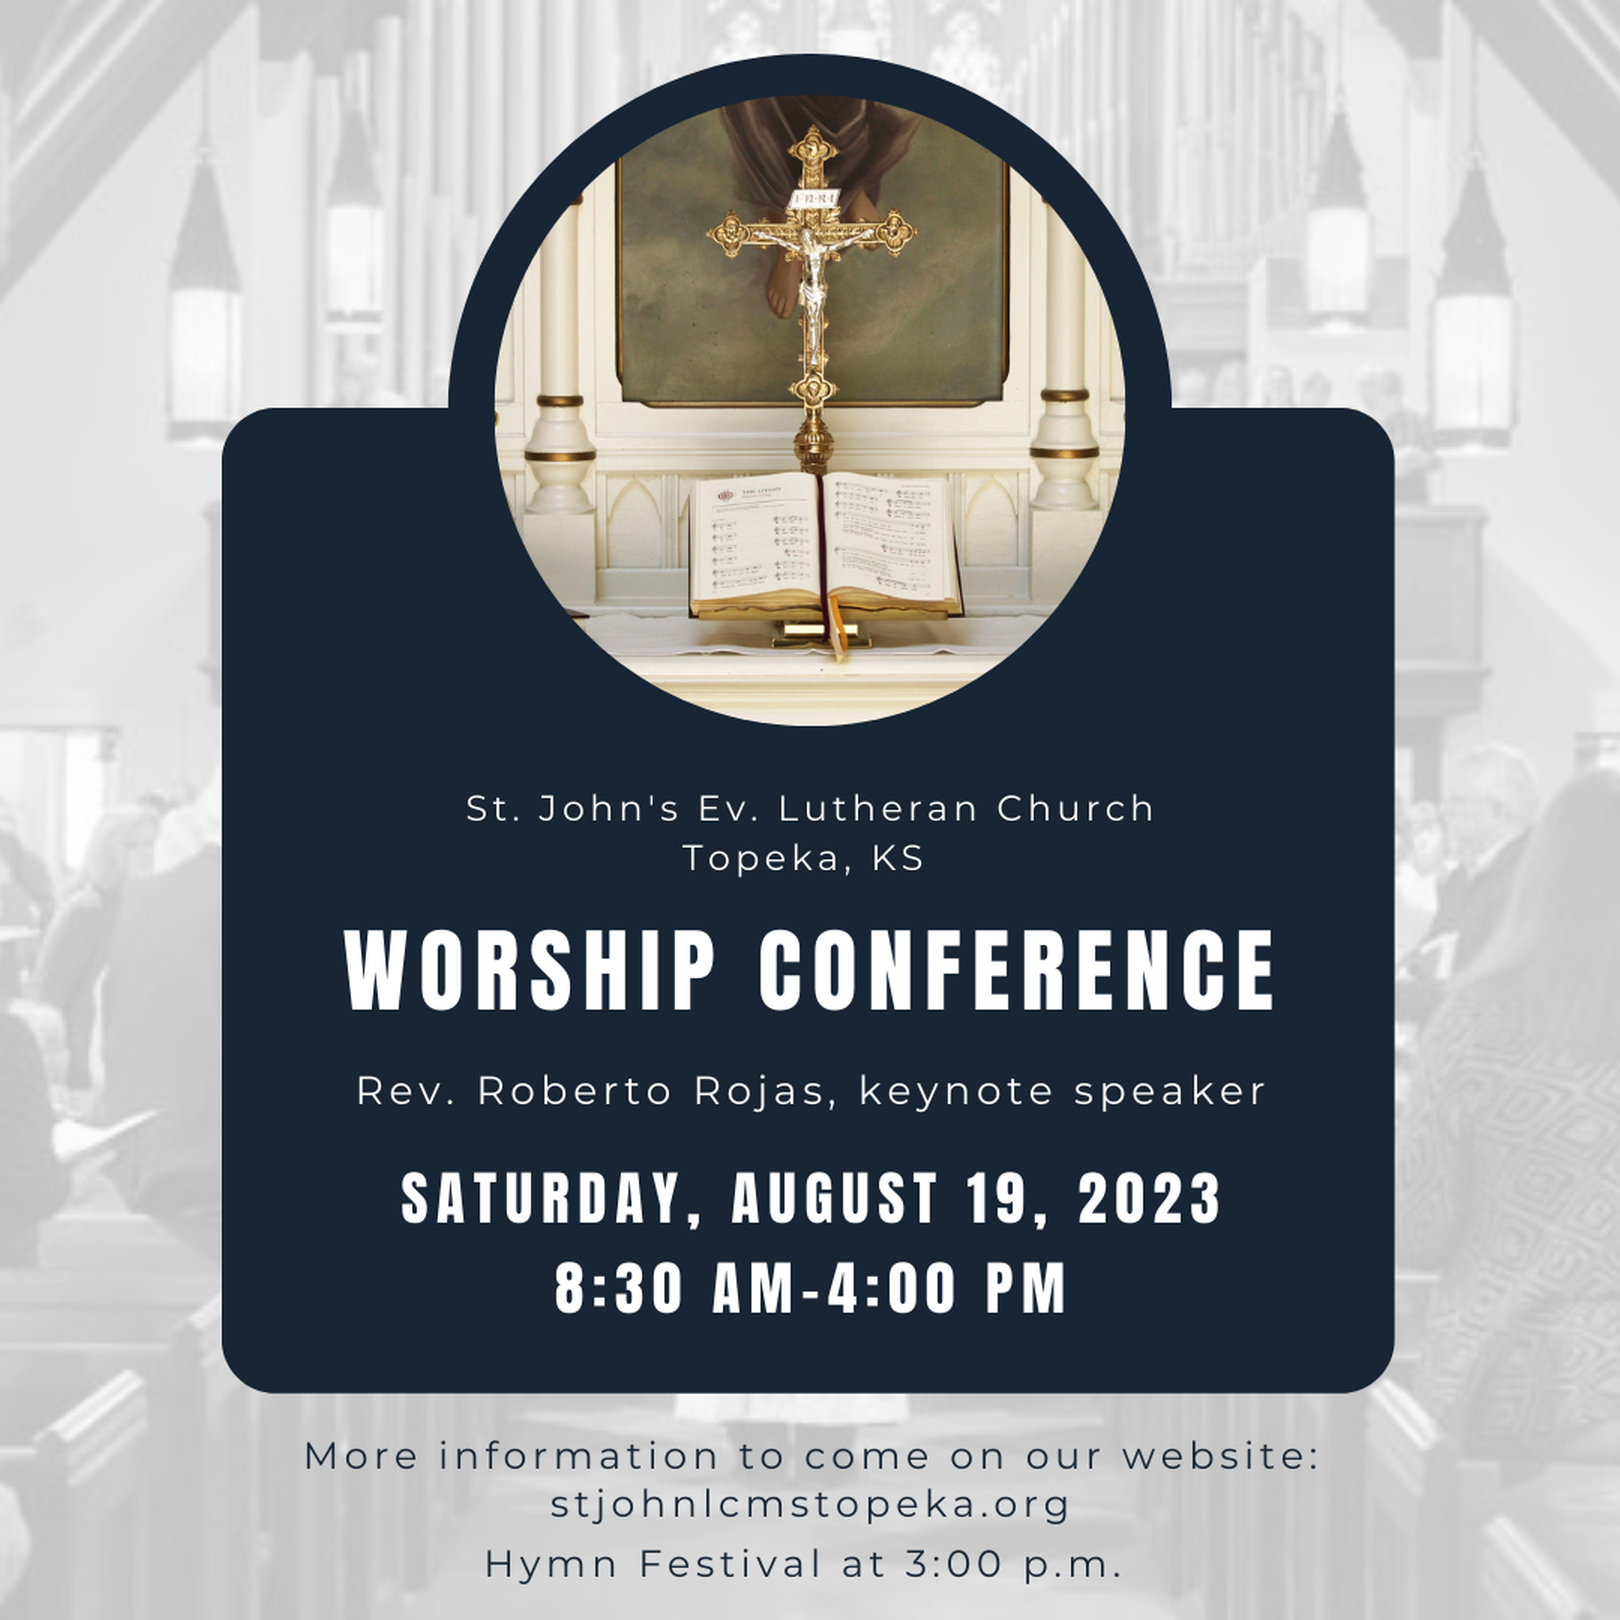 Worship Conference St. John's Ev. Lutheran Church